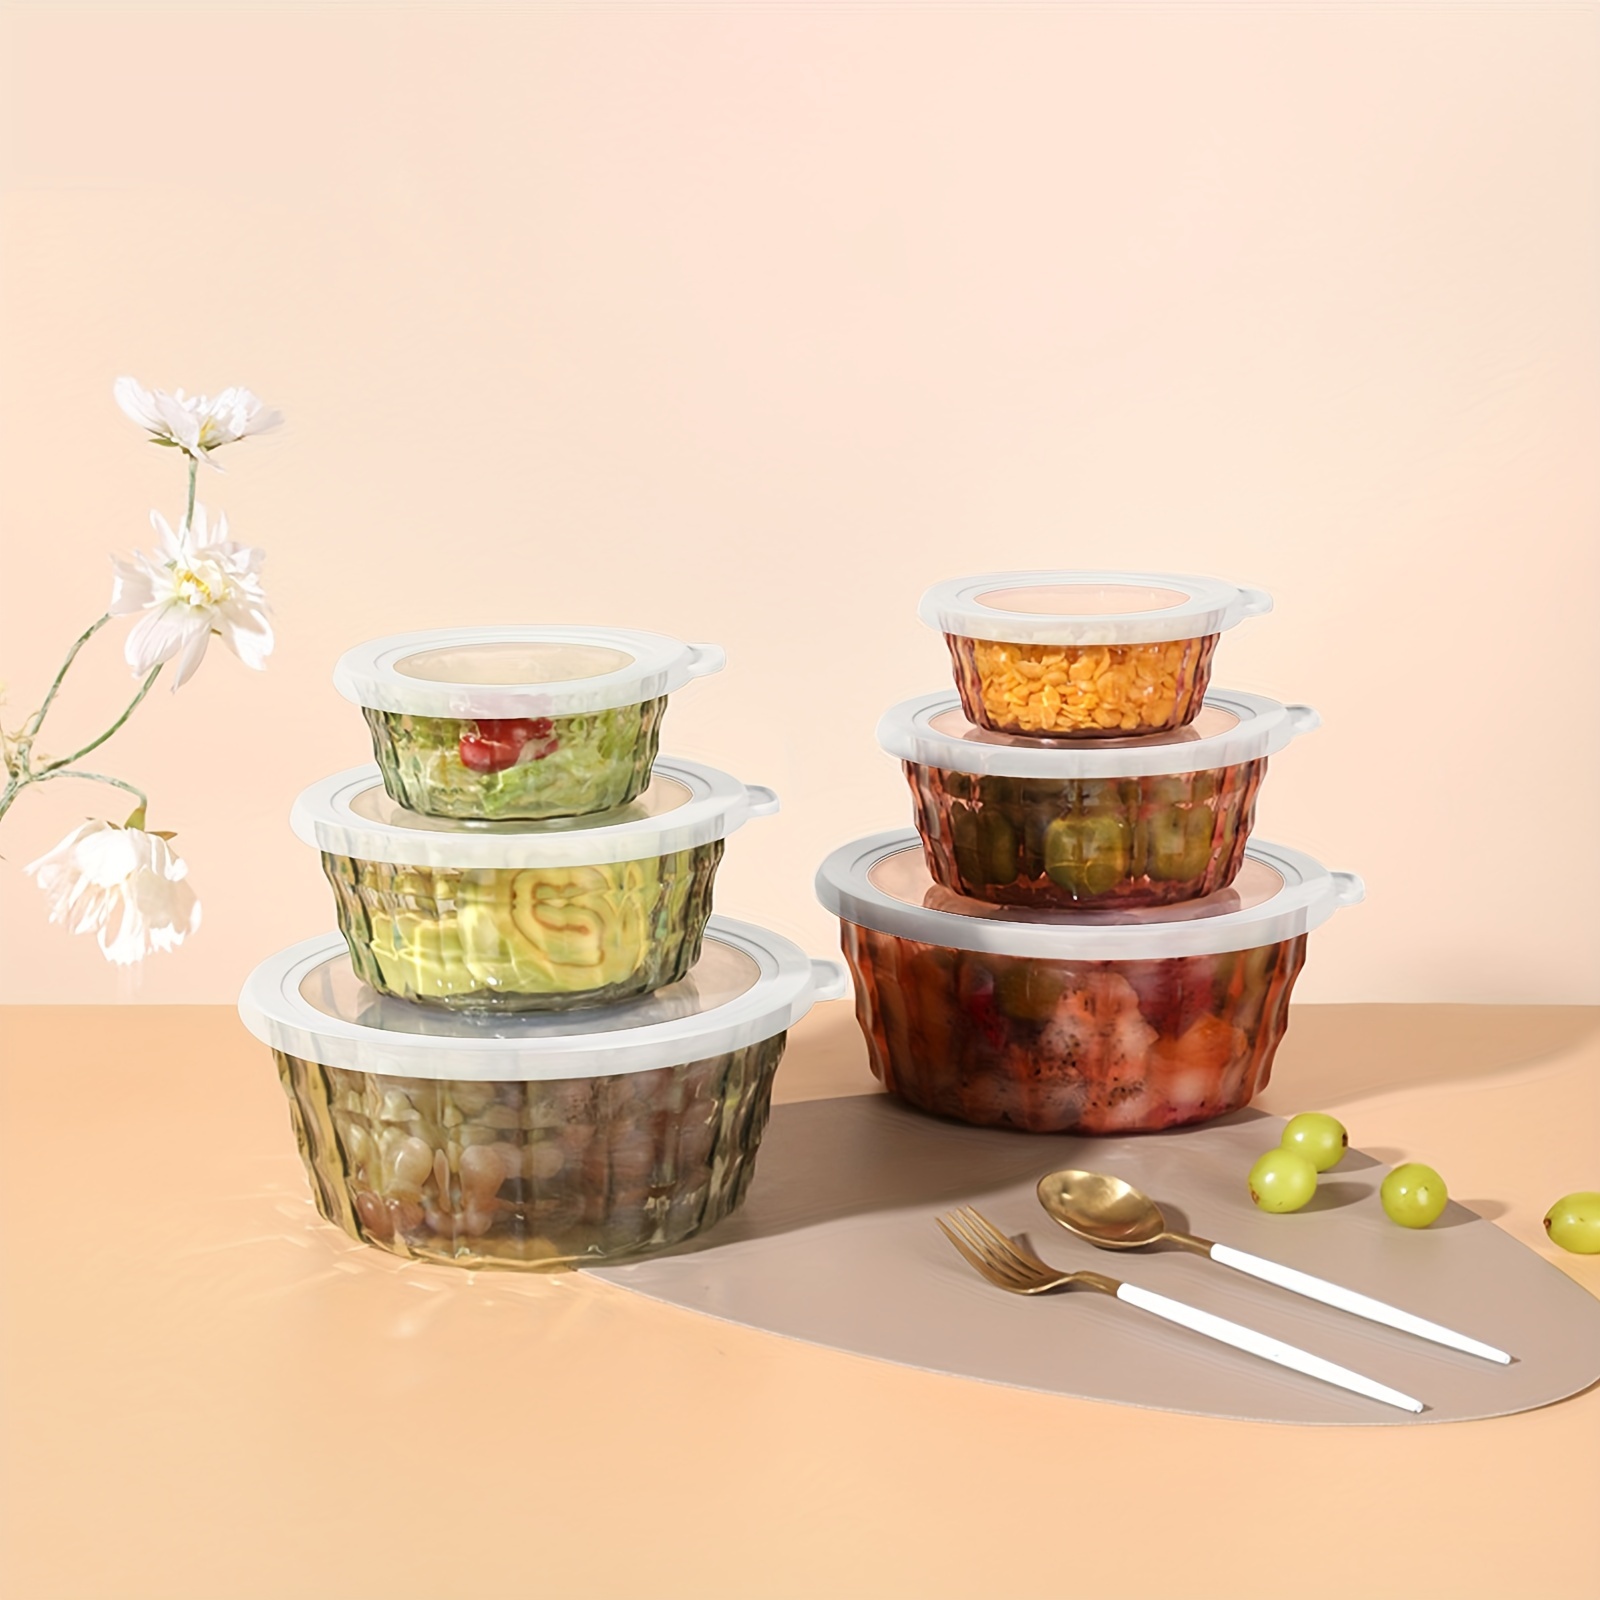 2pcs Ceramic Bowl Set With Lids Straight Mouth Bowl Serving Bowls With  Lids, Dessert Bowl,Food Storage Container, Porcelain Prep Bowl,Microwave &  Dish